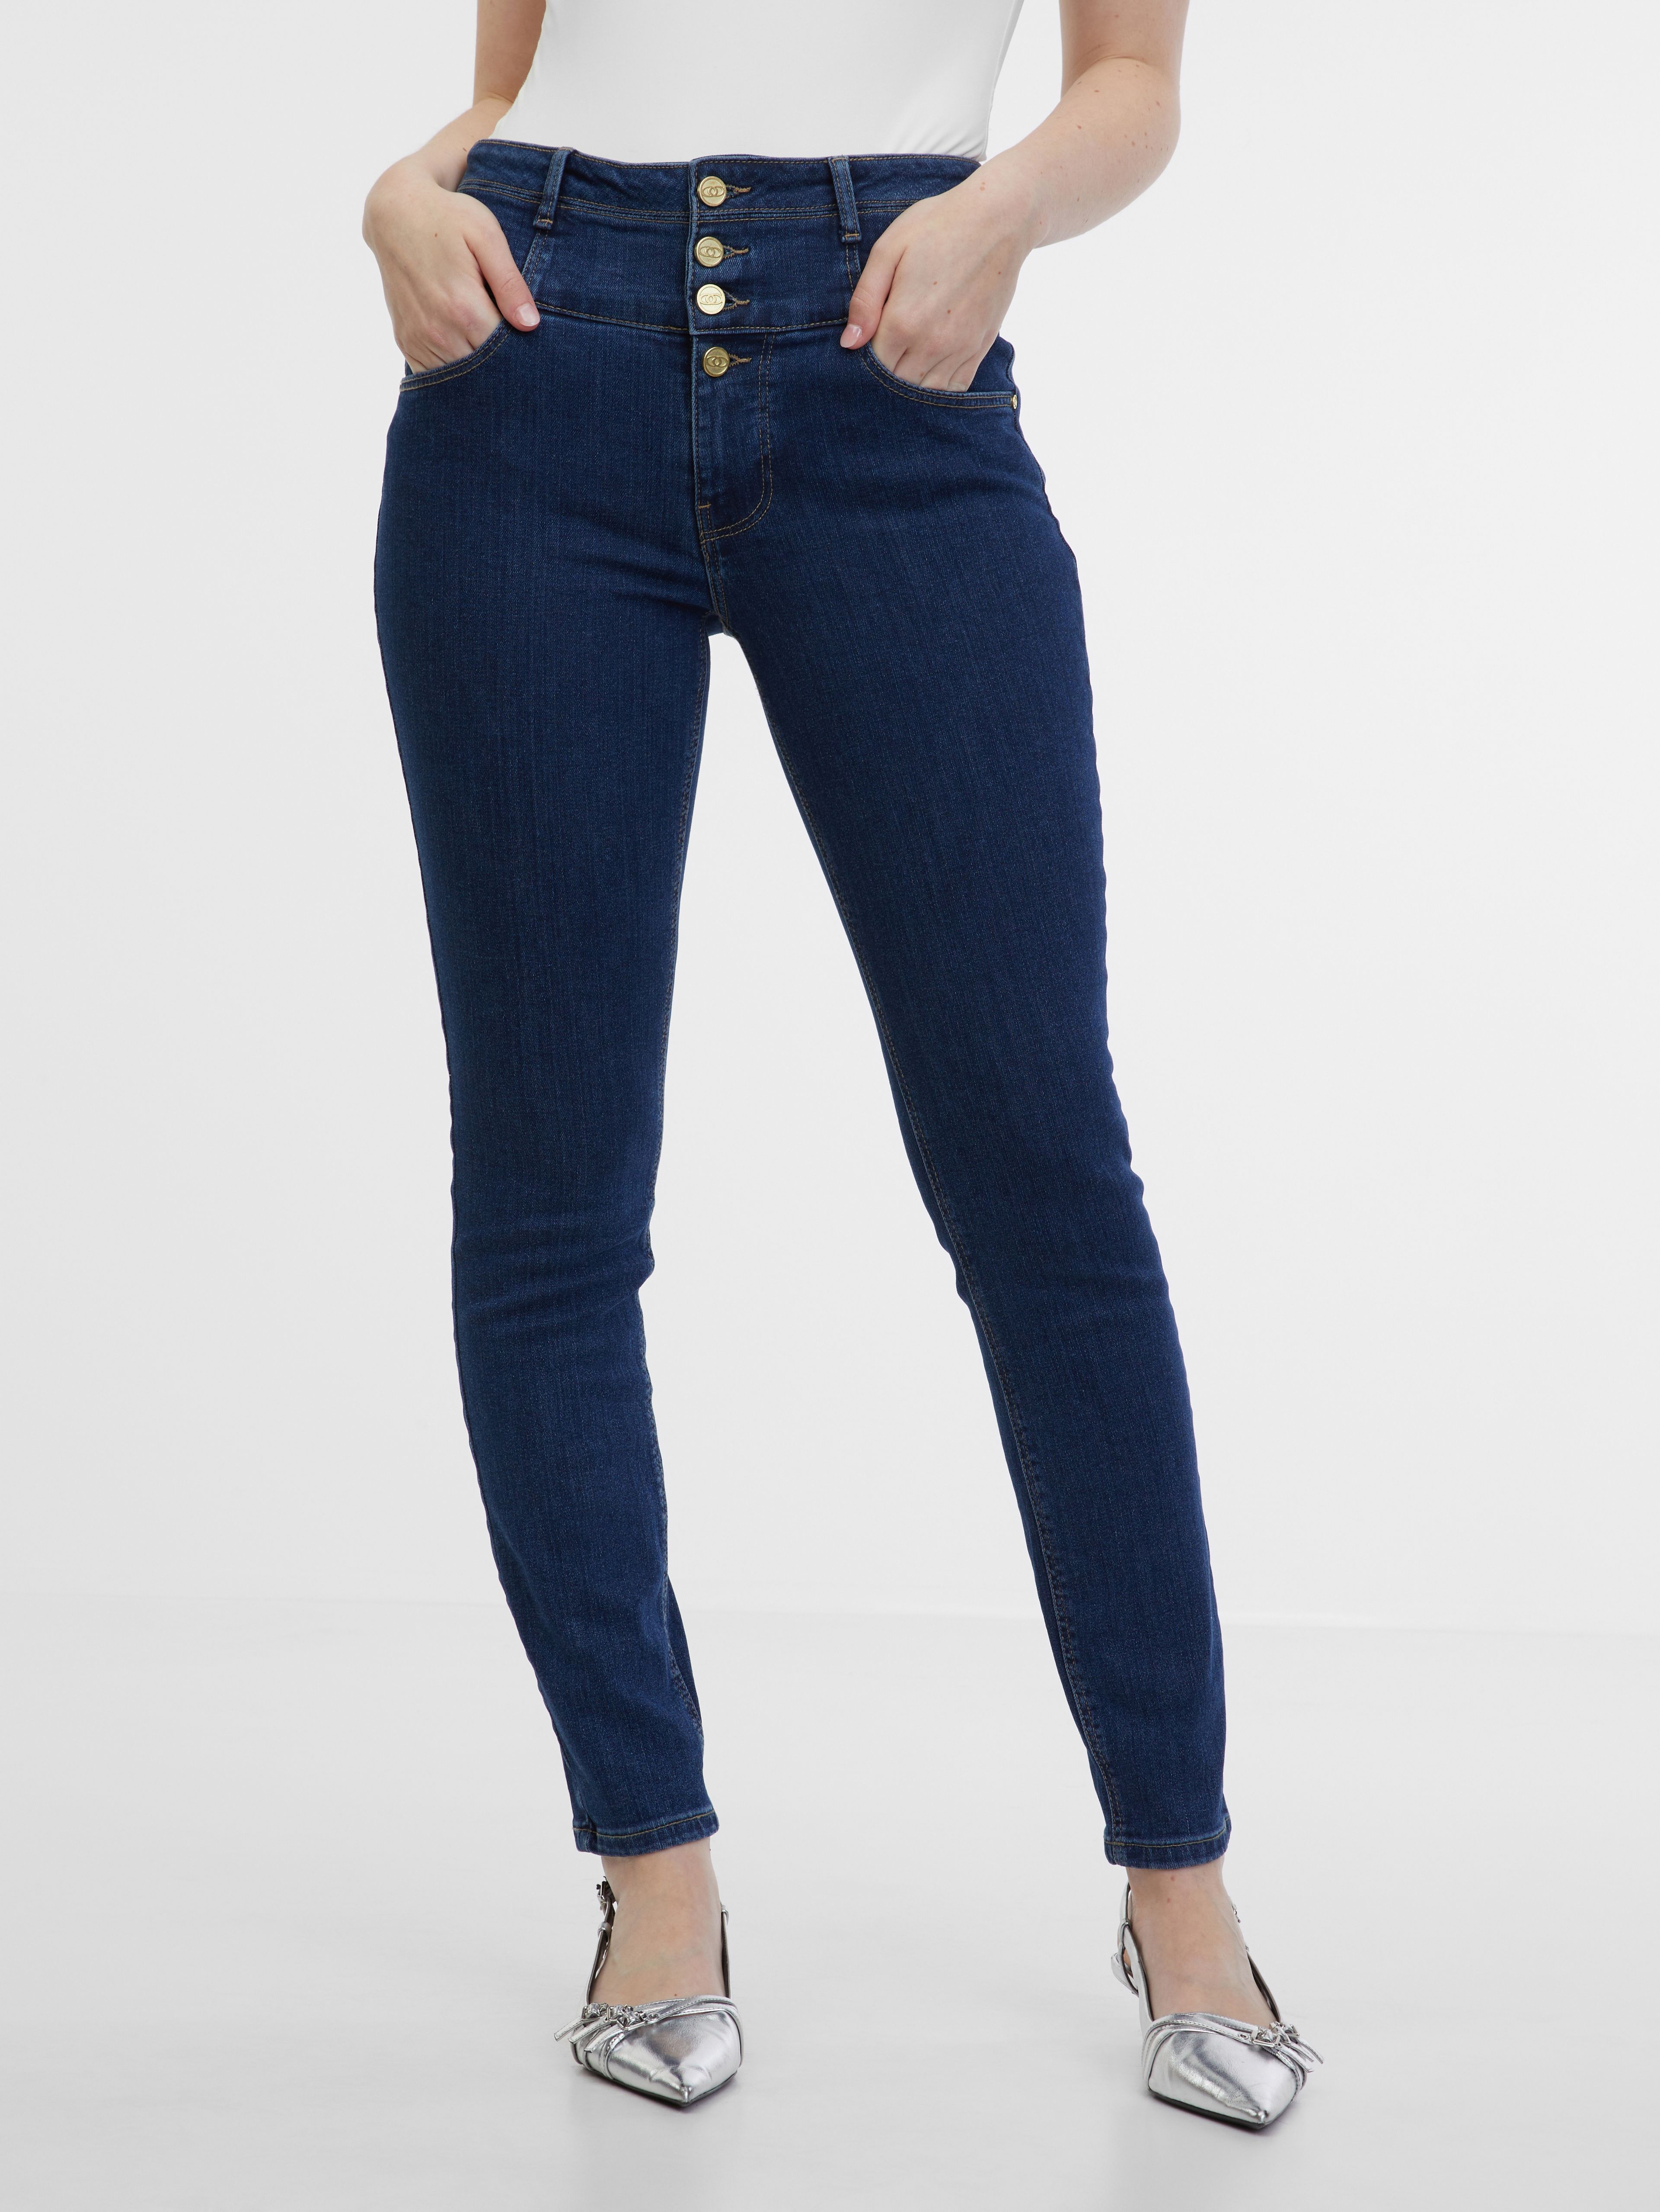 Ciemnoniebieskie jeansy damskie skinny fit ORSAY